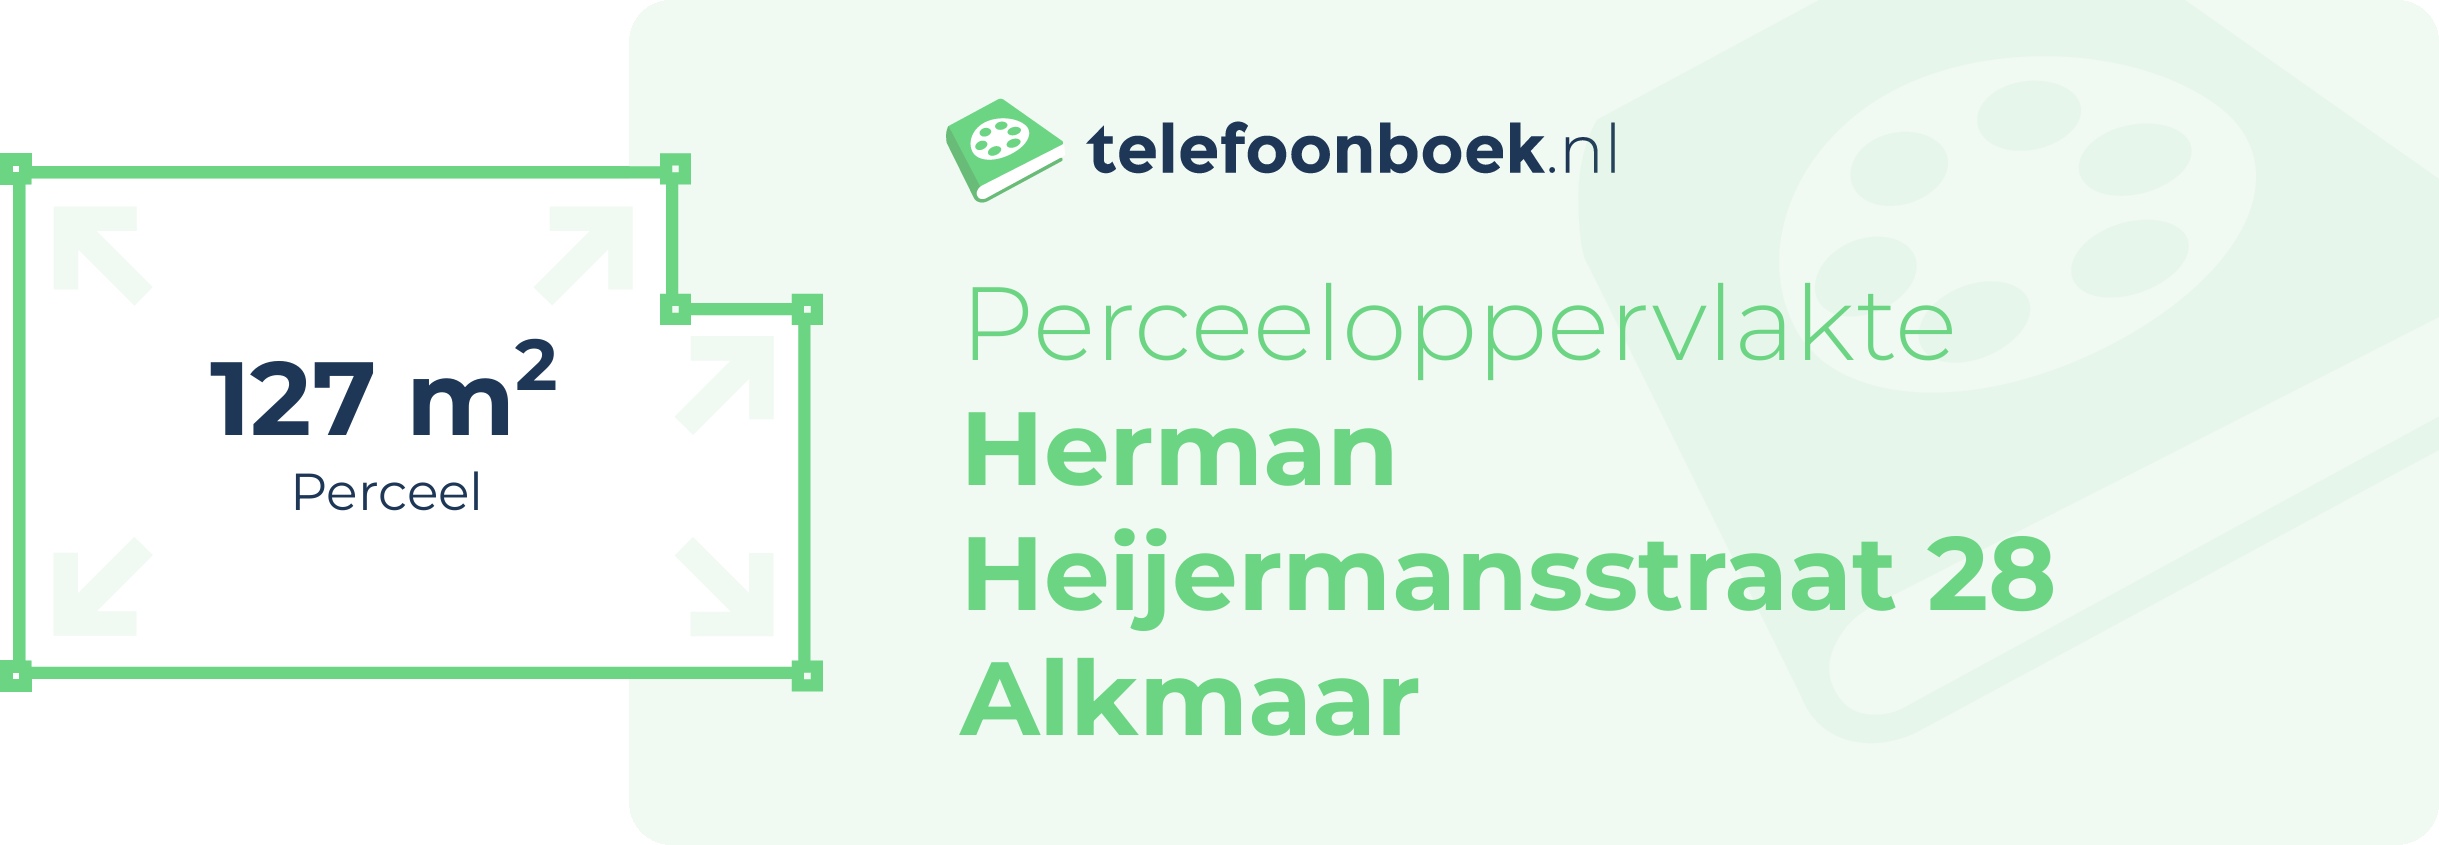 Perceeloppervlakte Herman Heijermansstraat 28 Alkmaar